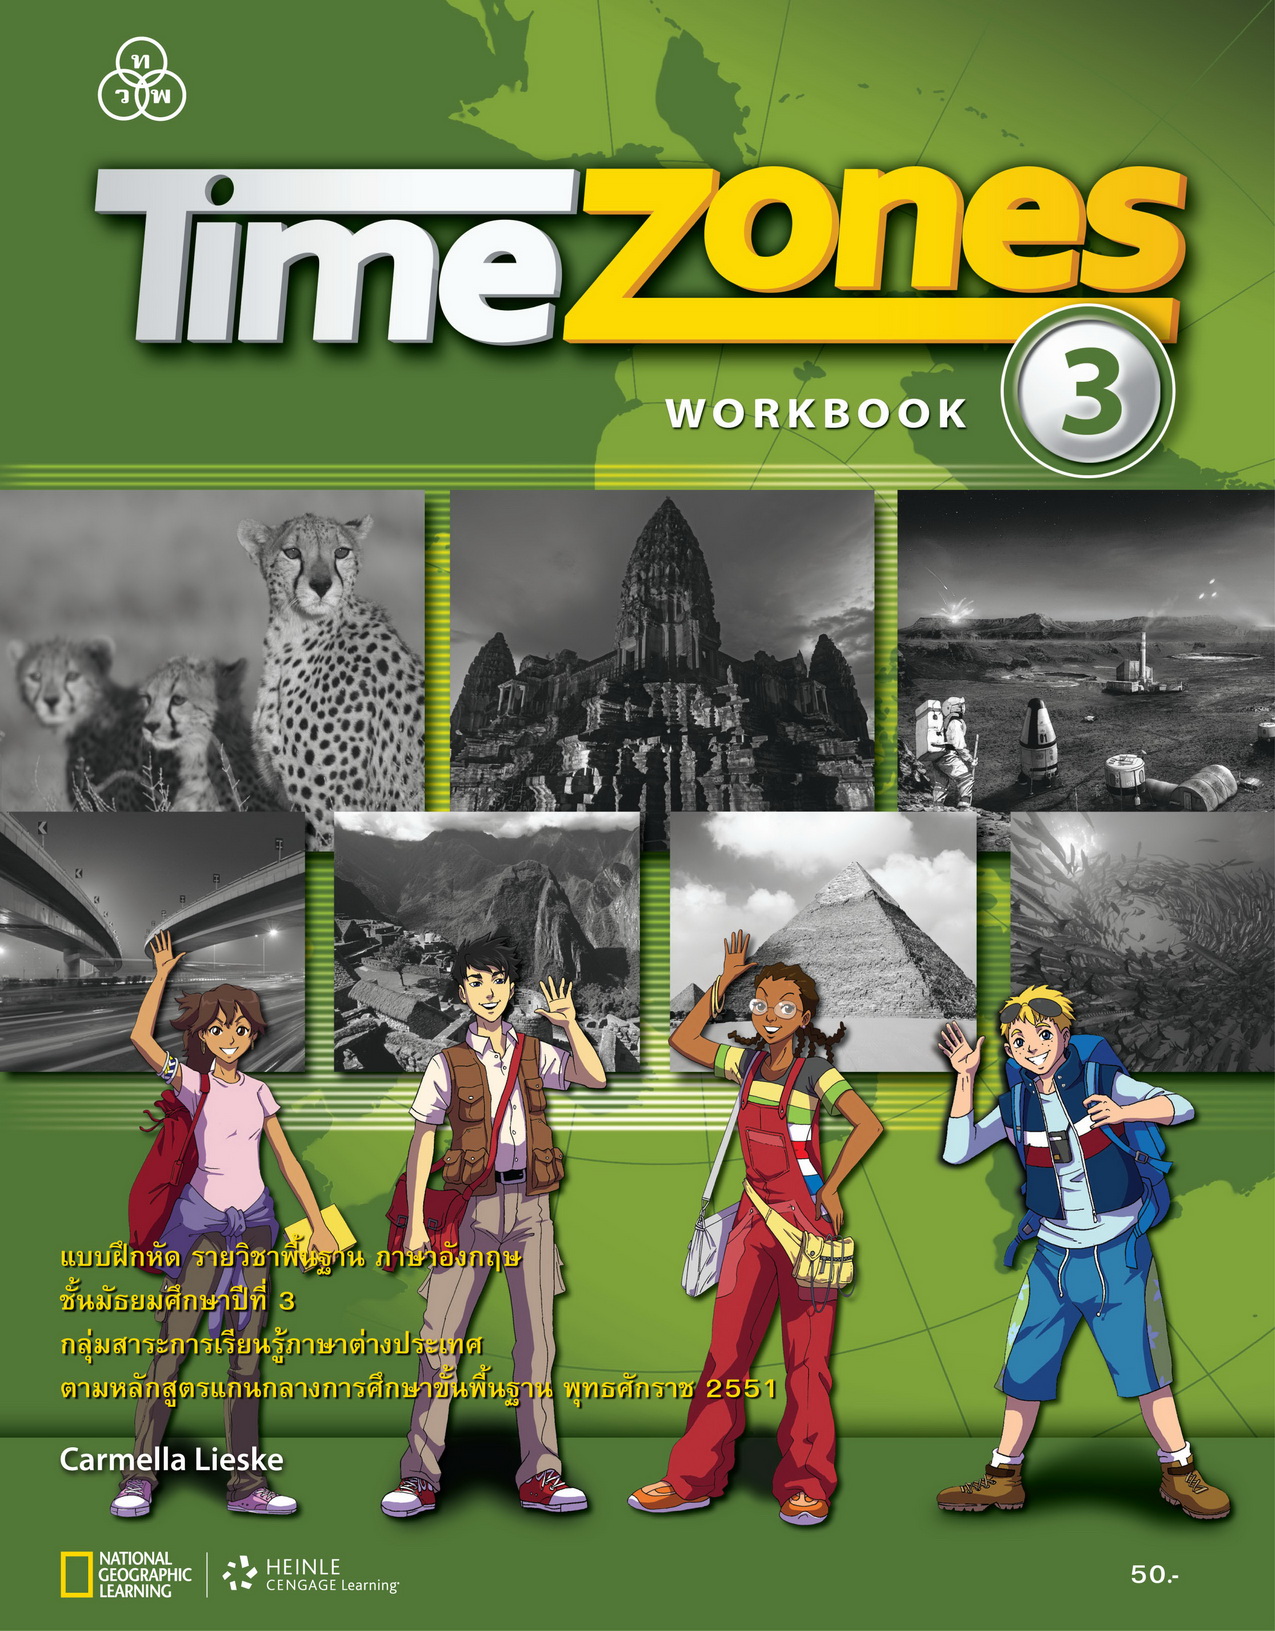 TimeZones Workbook 3